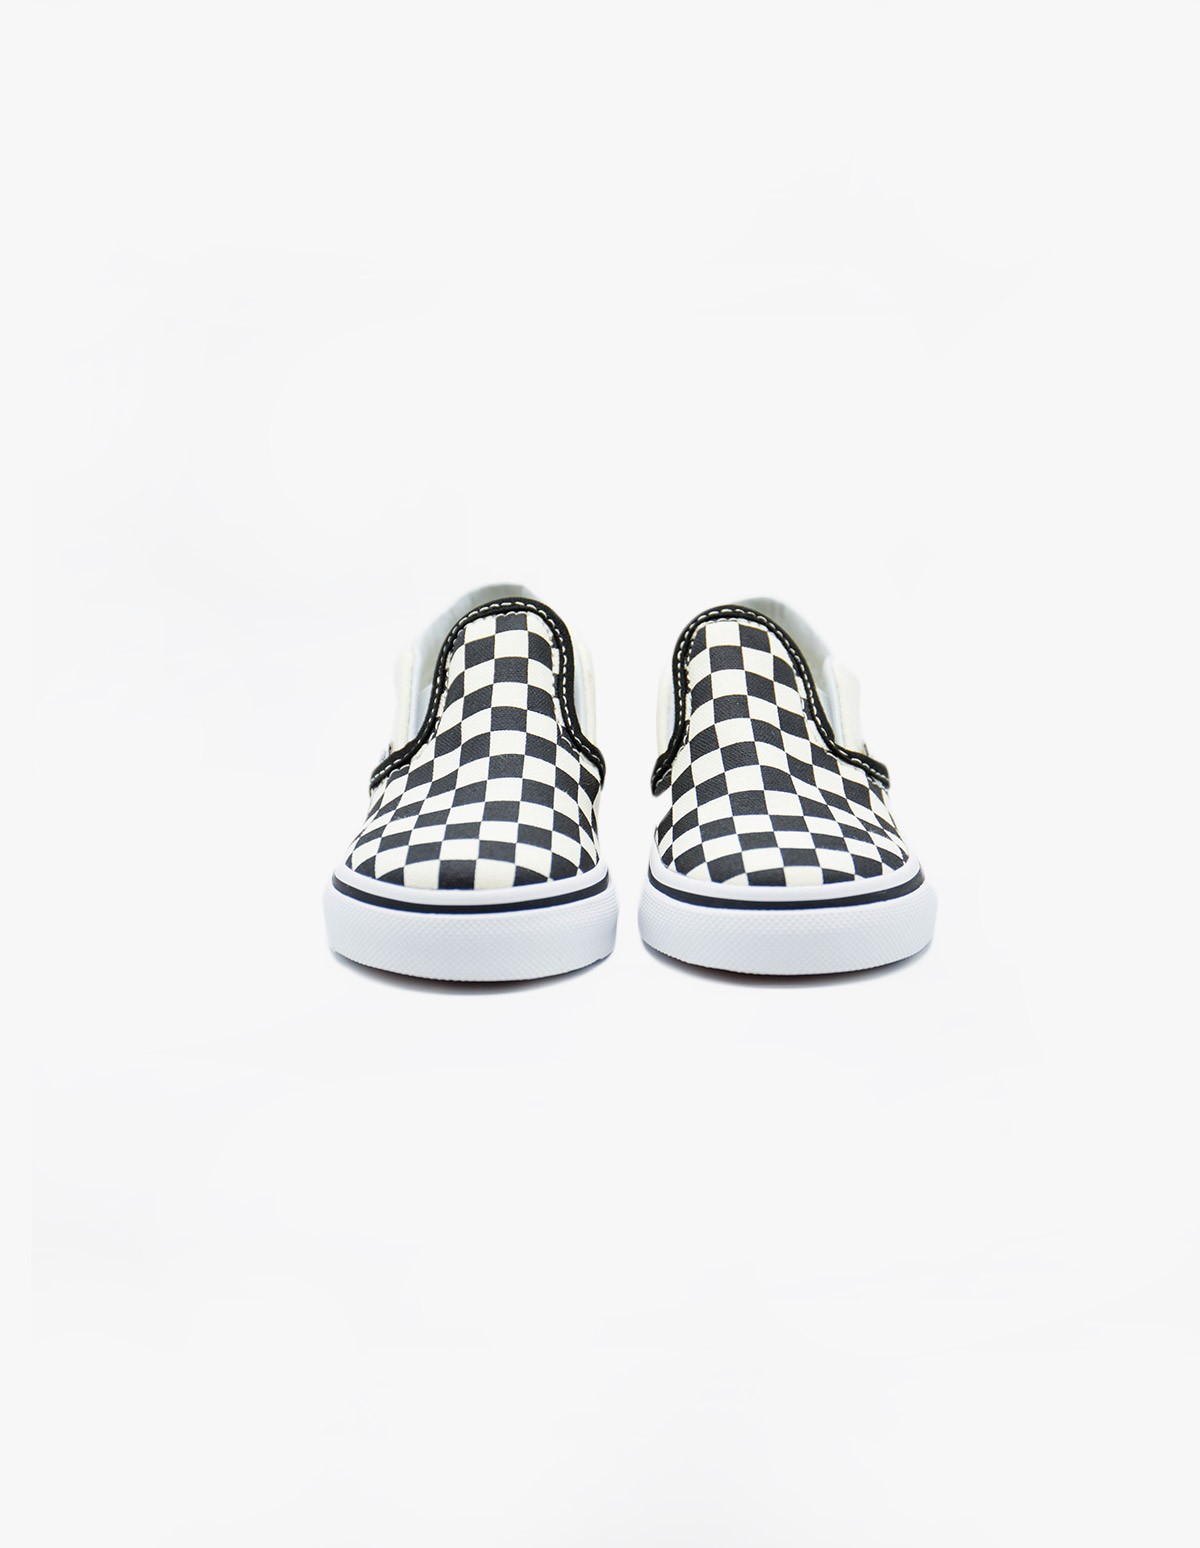 Vans Slip-On (Youth) in Black & White Checkerboard